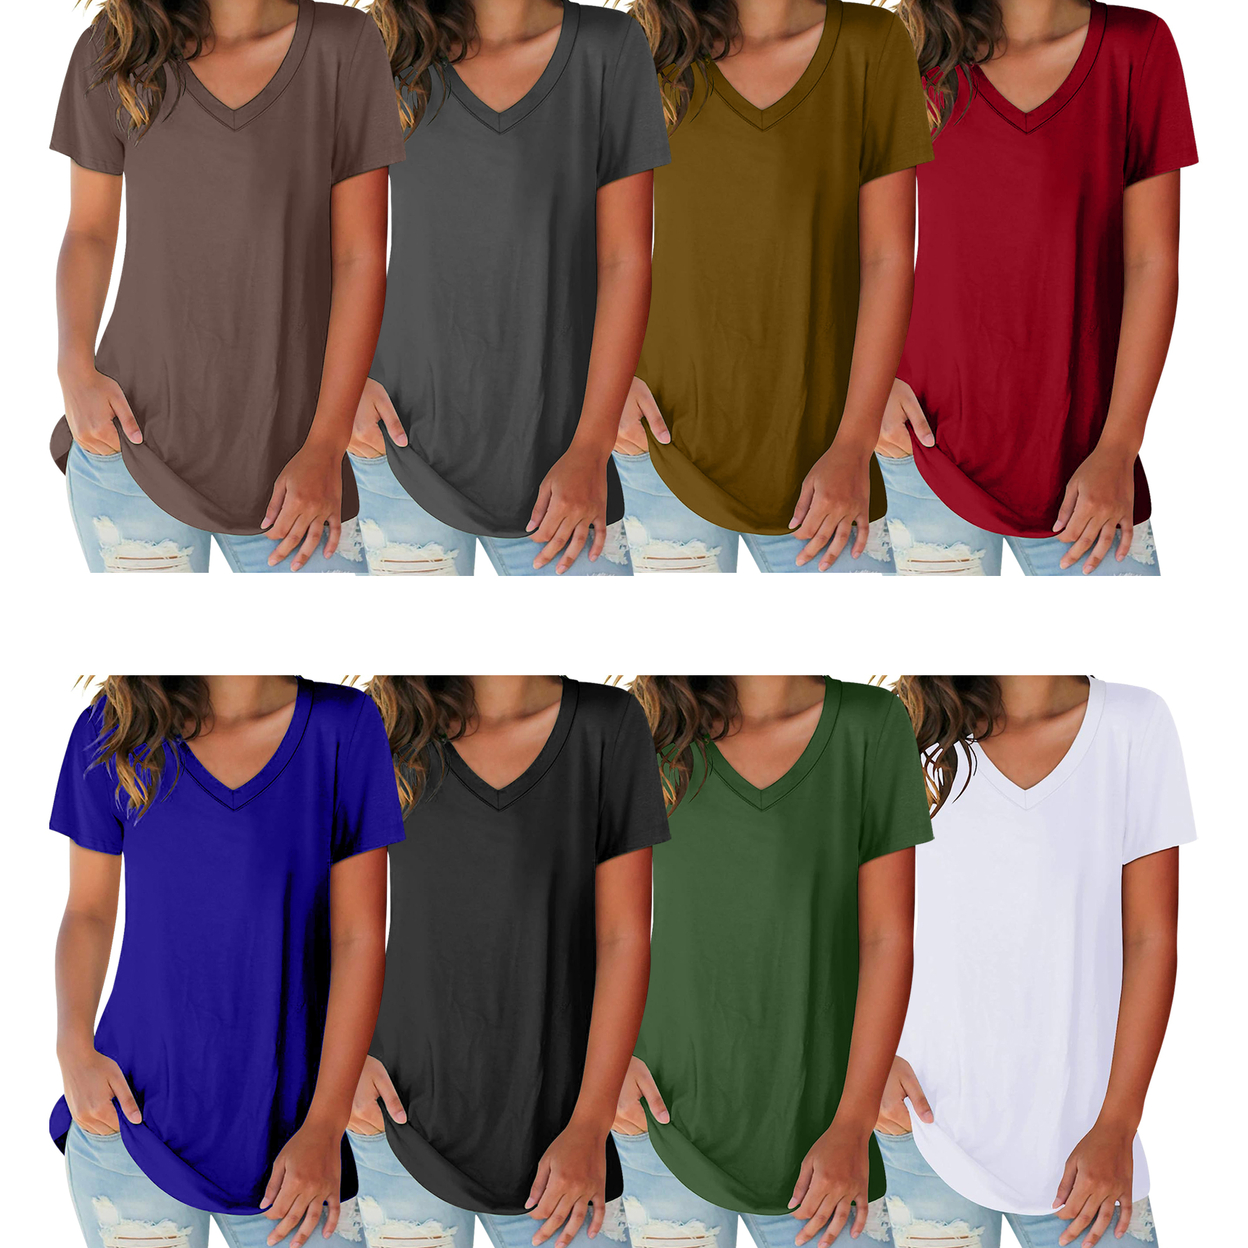 2-Pack: Women's Ultra Soft Smooth Cotton Blend Basic V-Neck Short Sleeve Shirts - Black & Grey, Medium